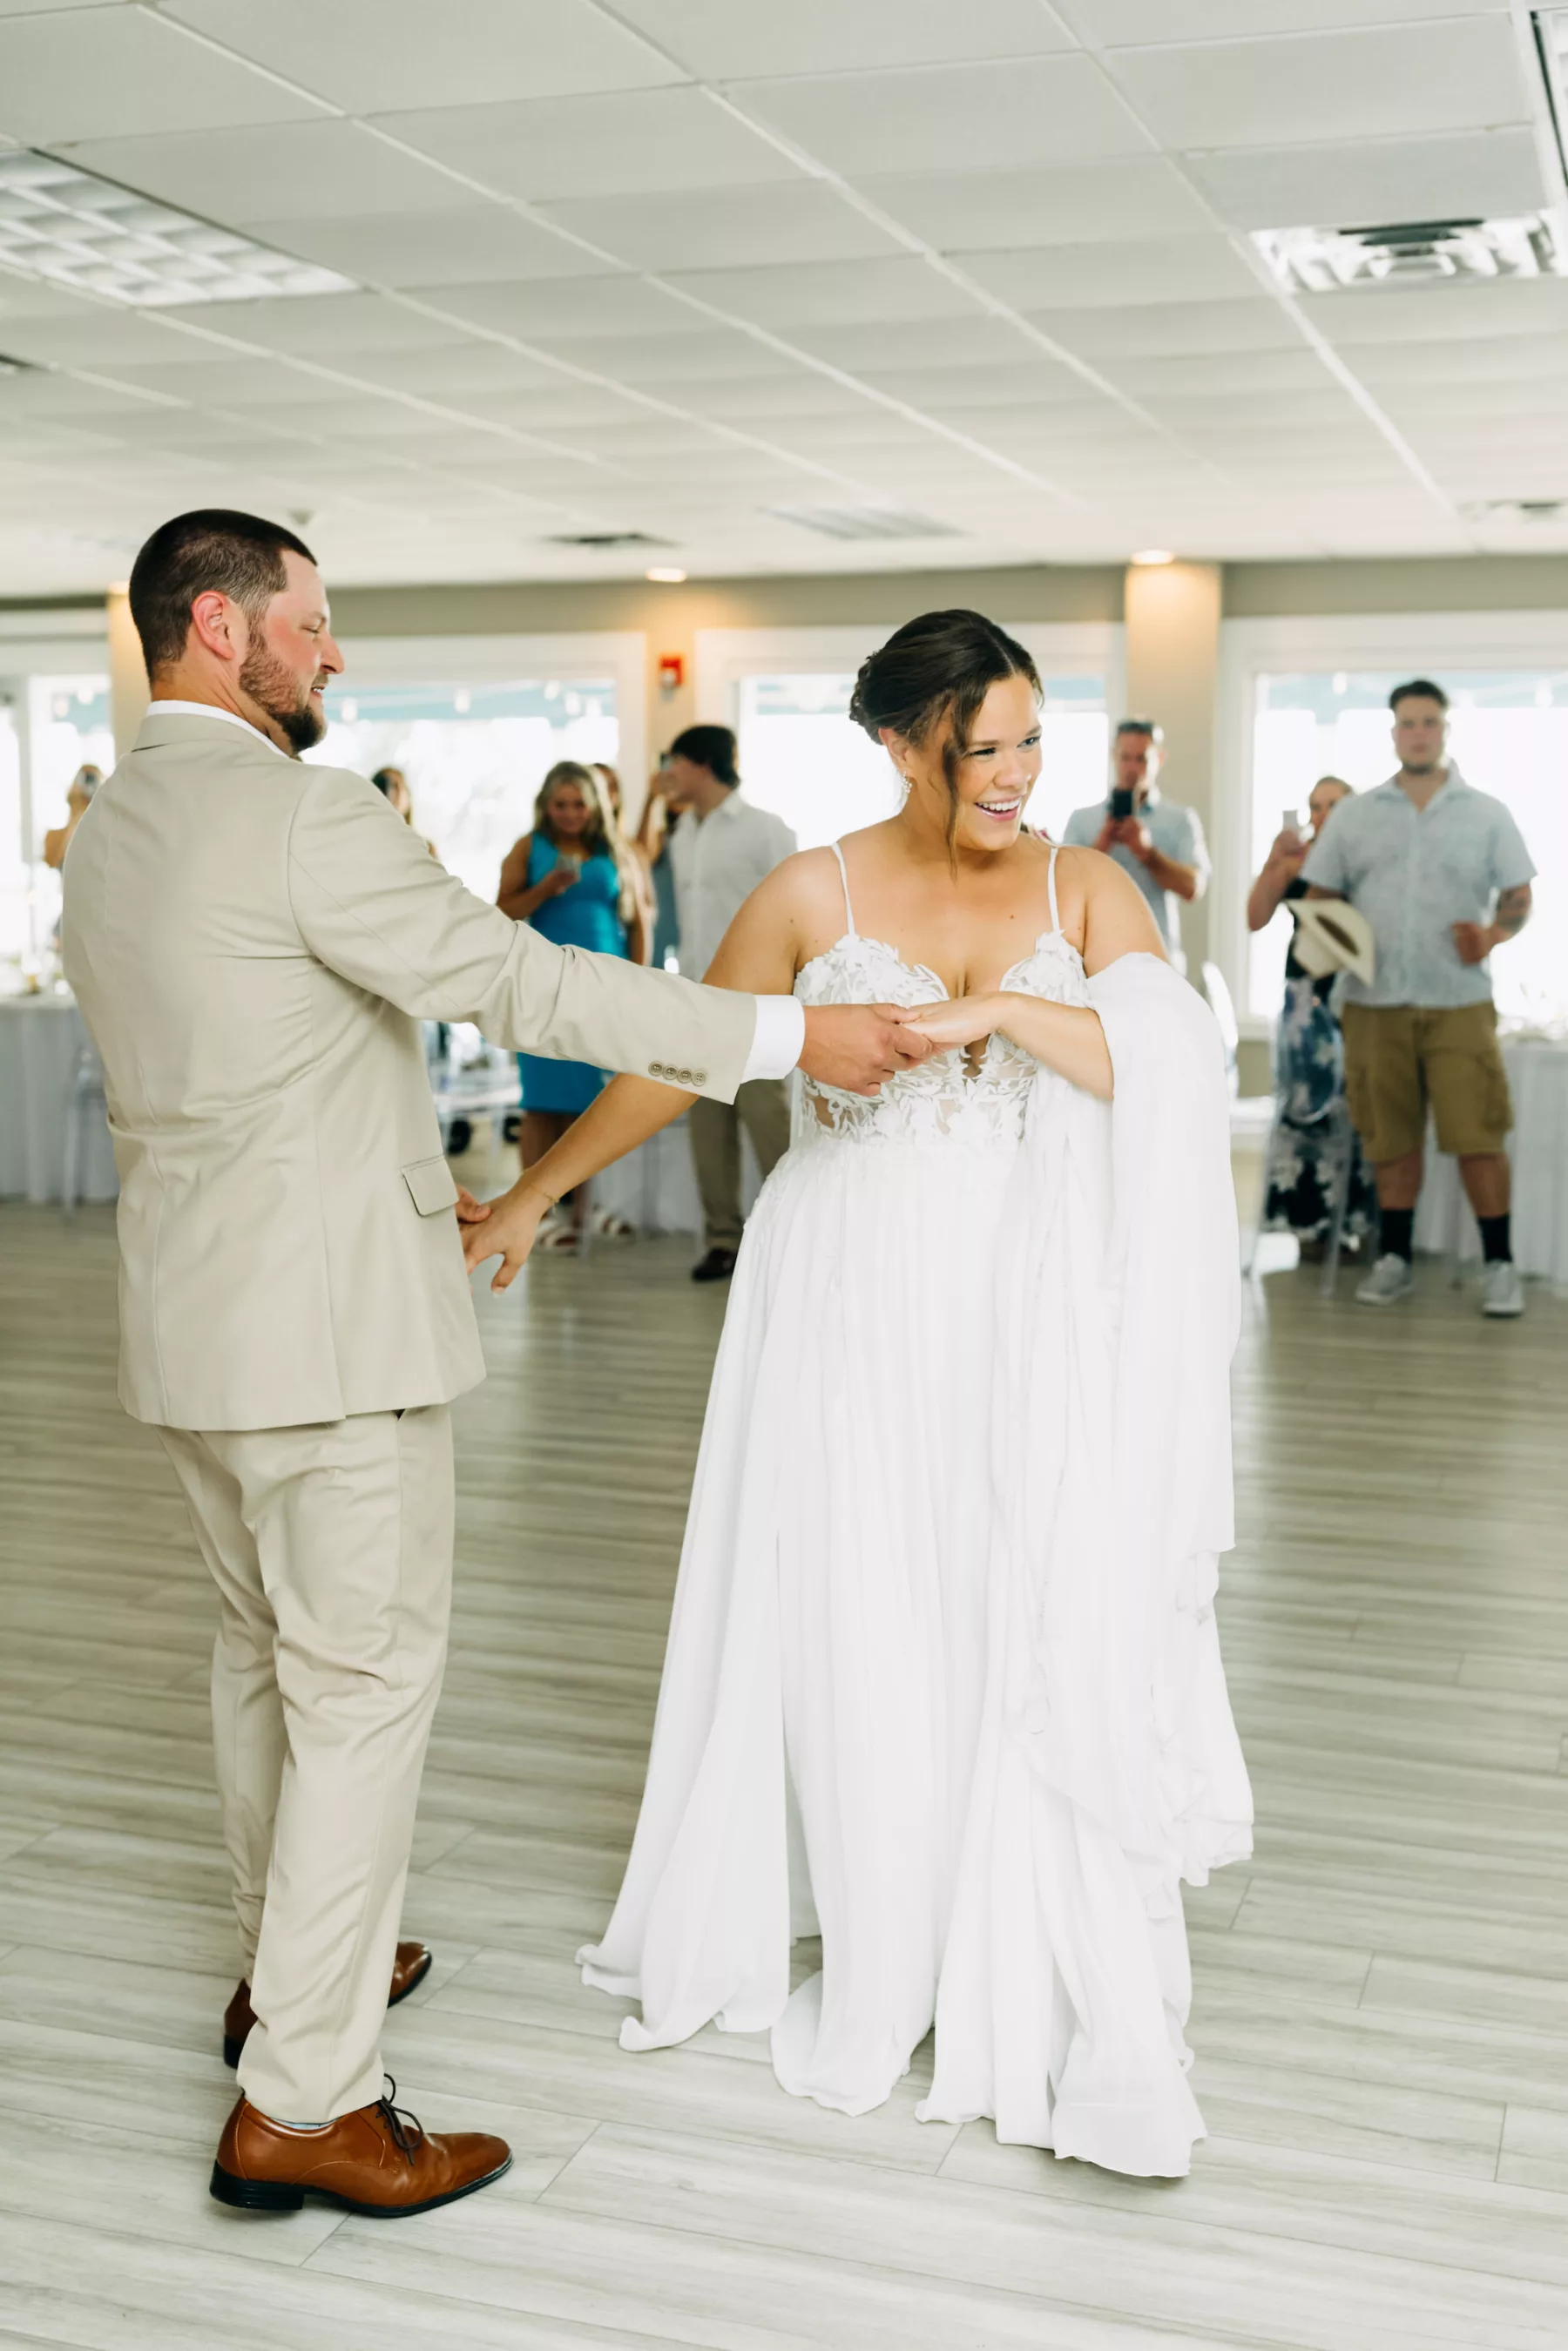 Bride and Groom First Dance Wedding Portrait | Tampa Bay DJ Grant Hammond and Associates